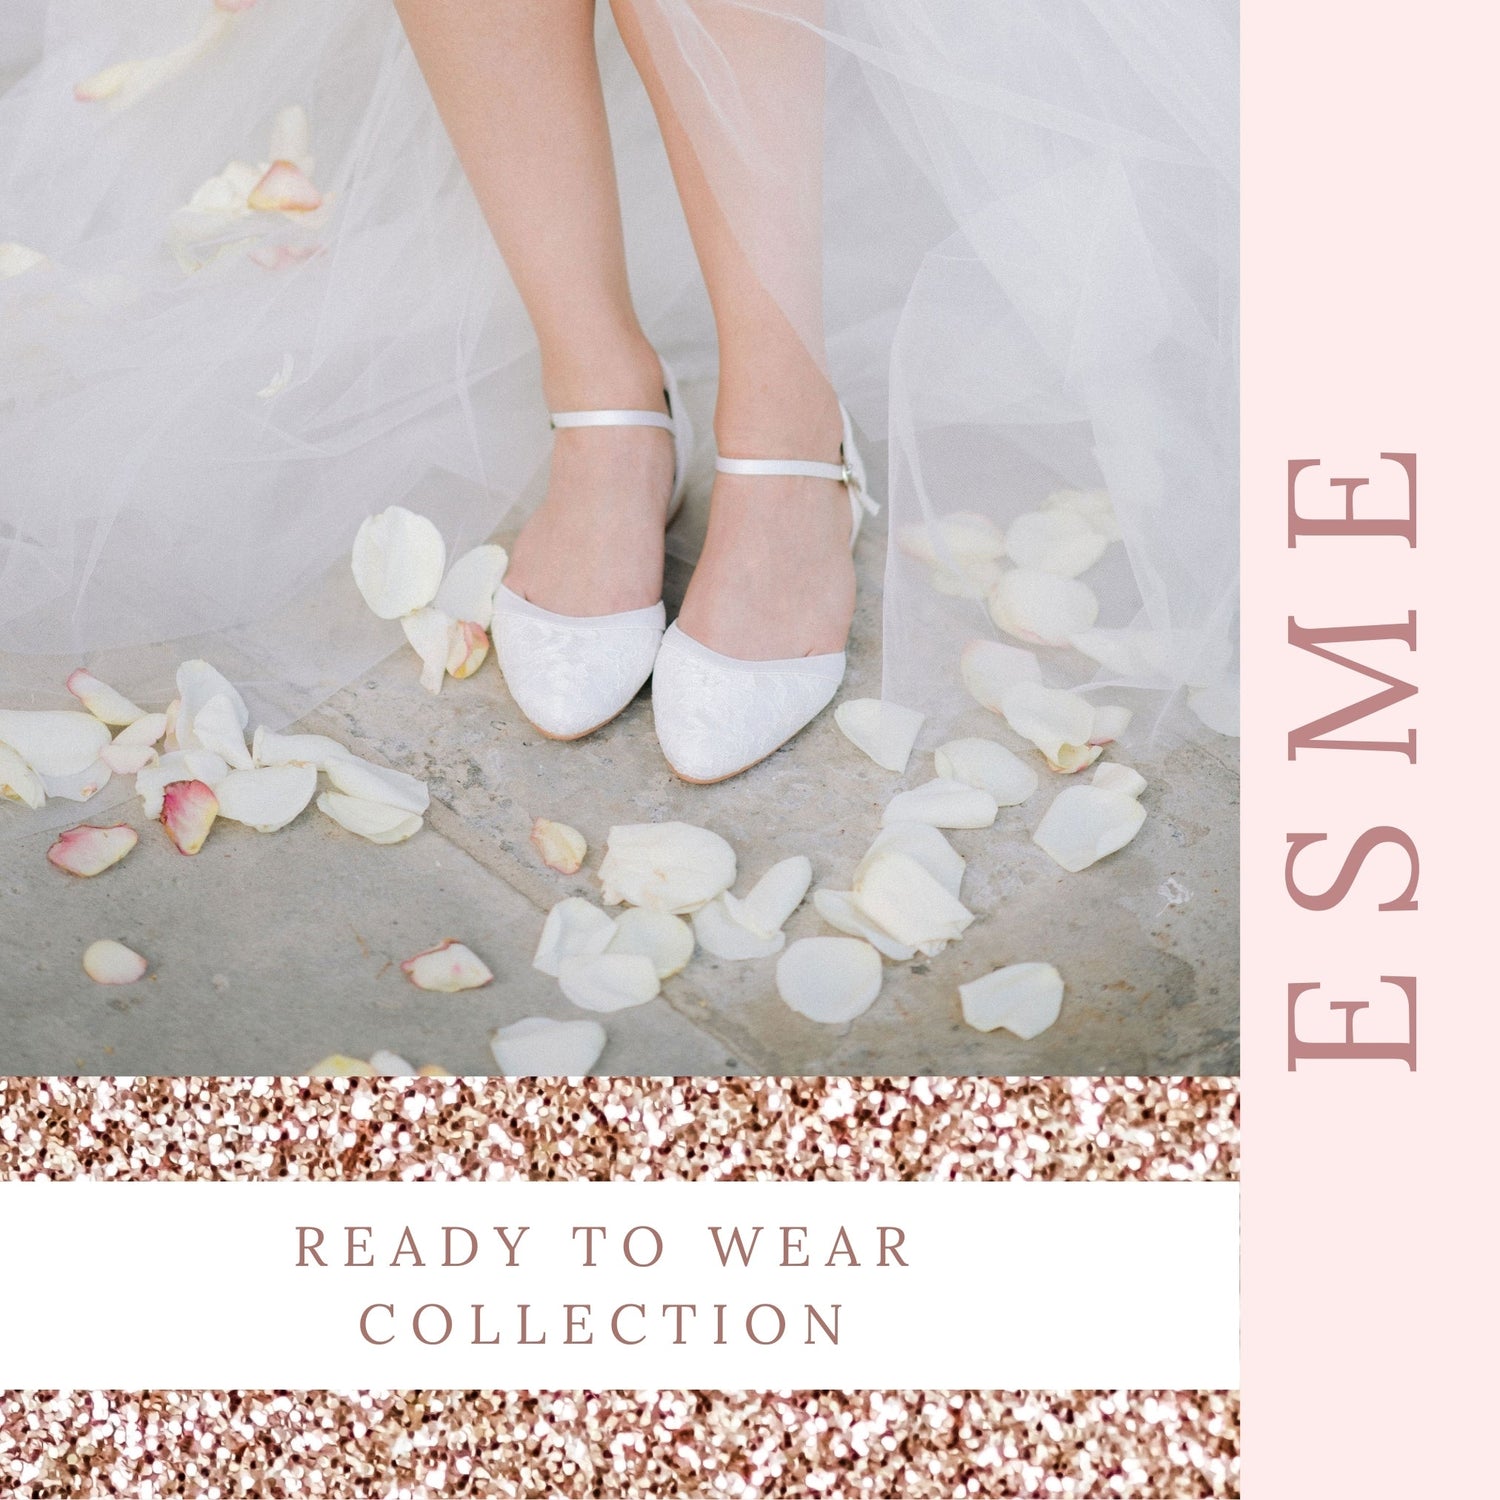 ivory-wedding-shoes-low-heel